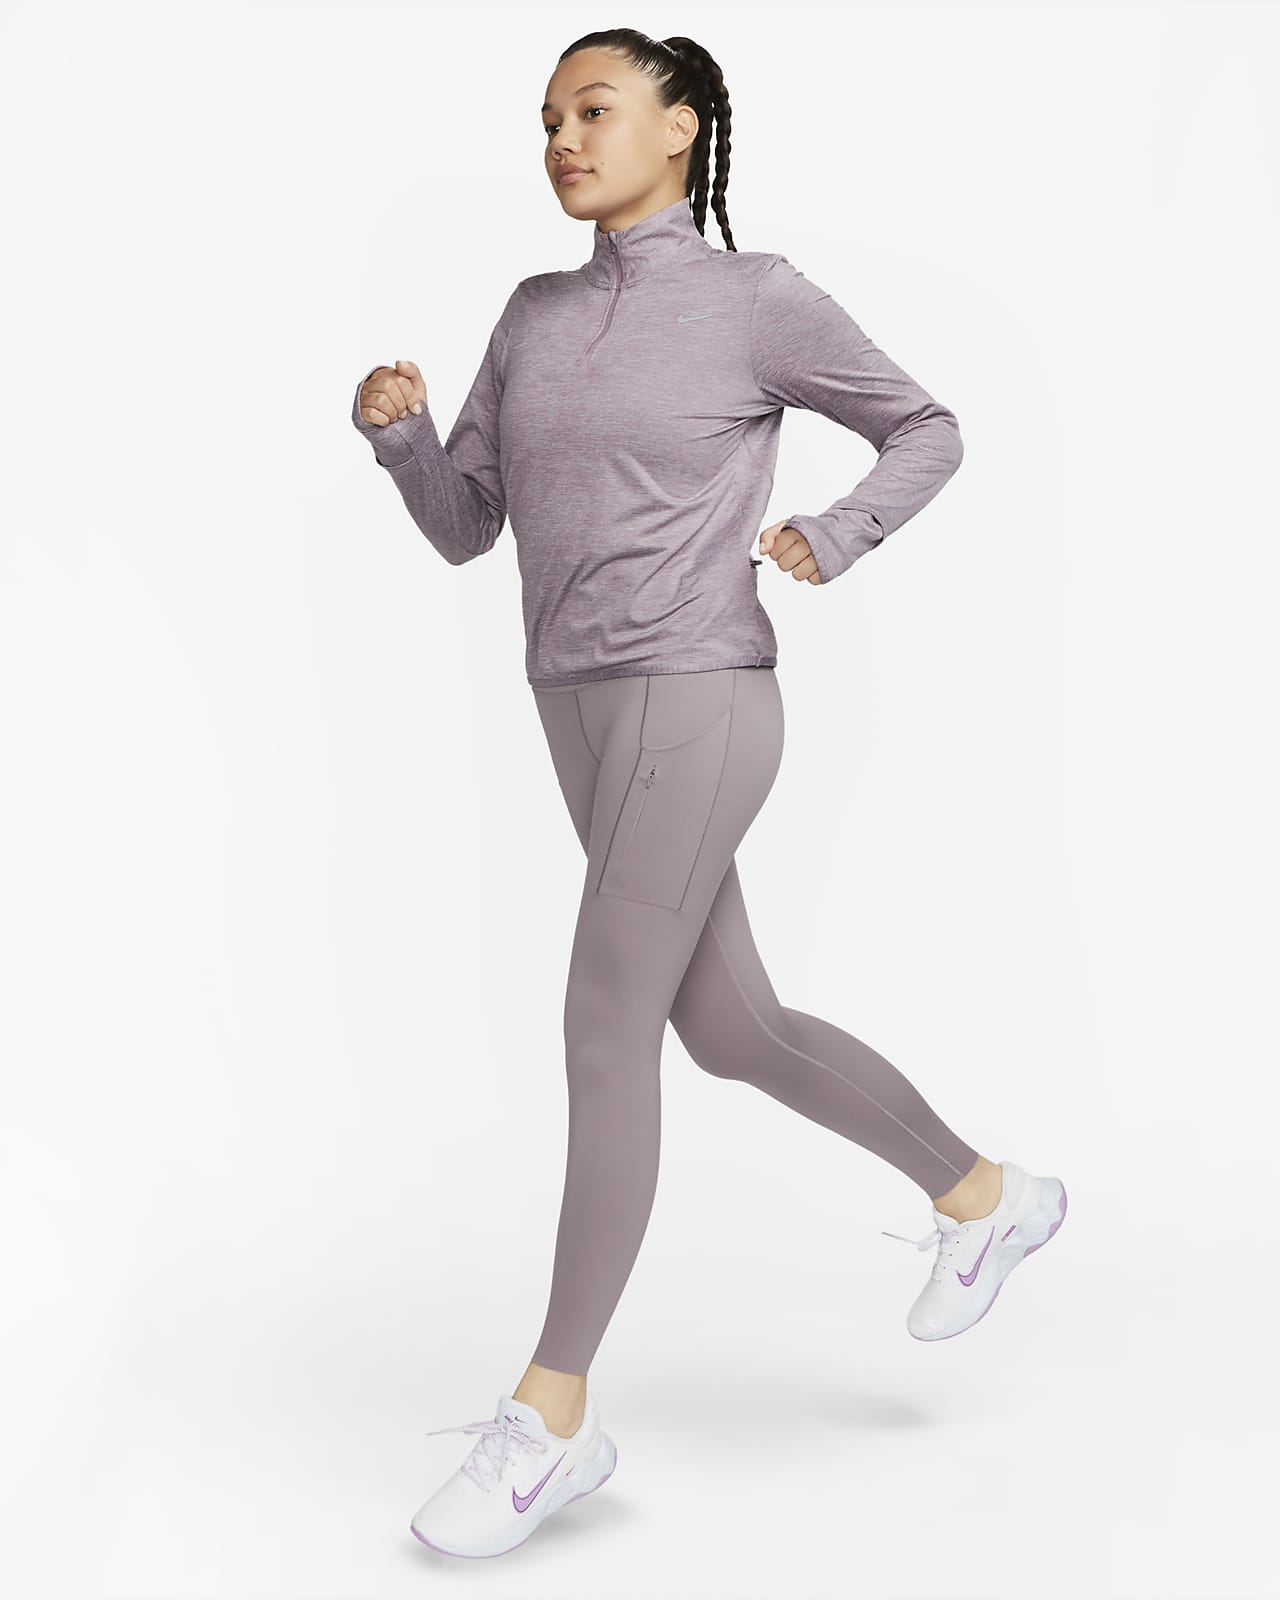 Nike Women's NWT $110 Swift Flex Slim Fit Woven Running Pants